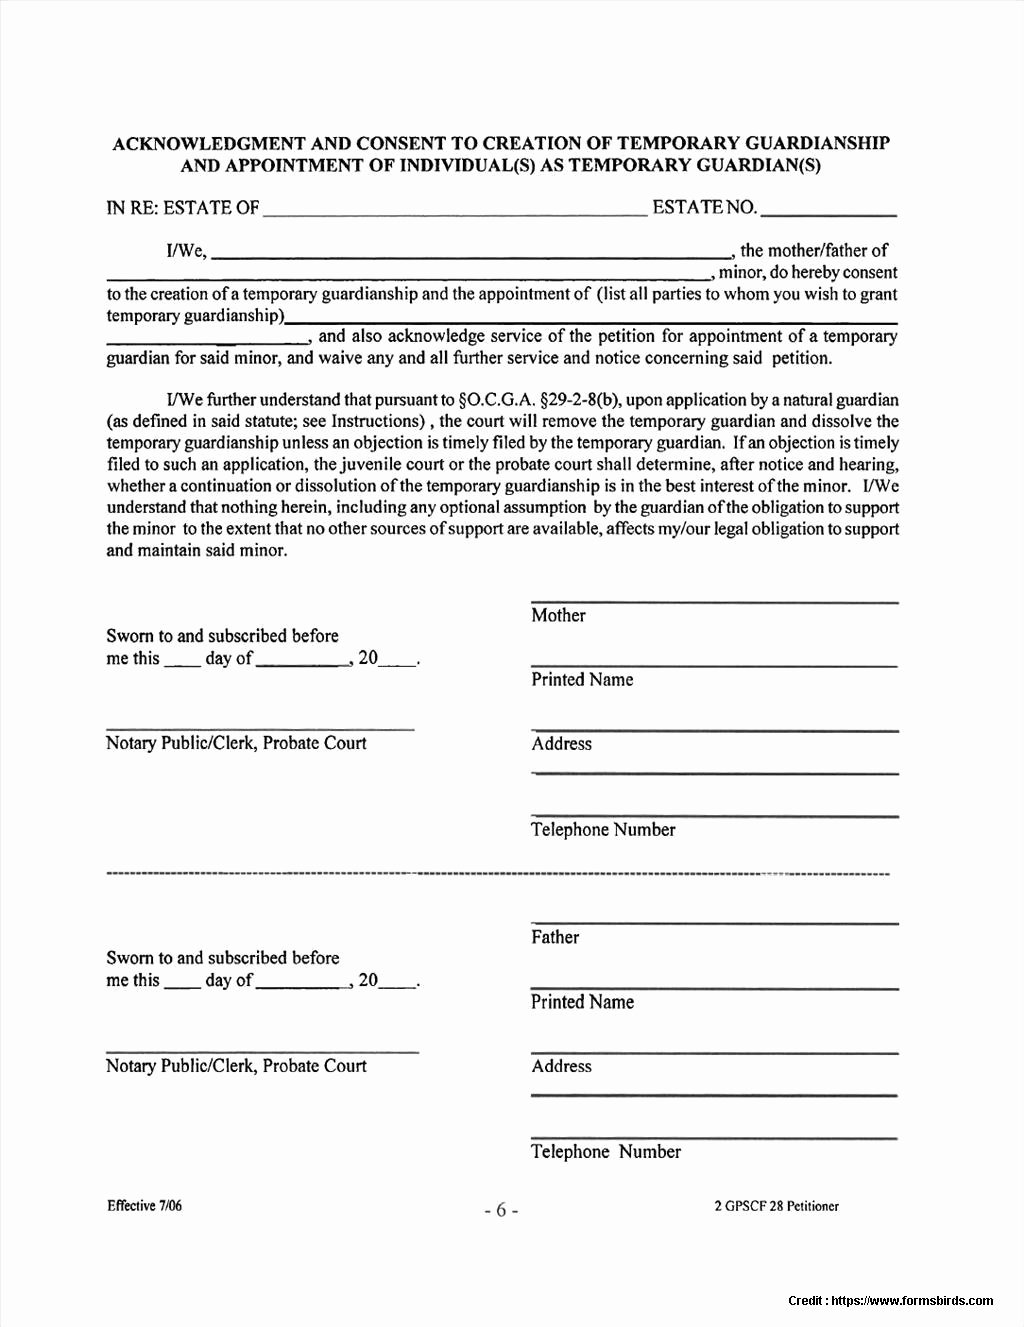 Sample Guardianship Letter In Case Of Death Fresh Legal Guardianship forms Free Download form Resume